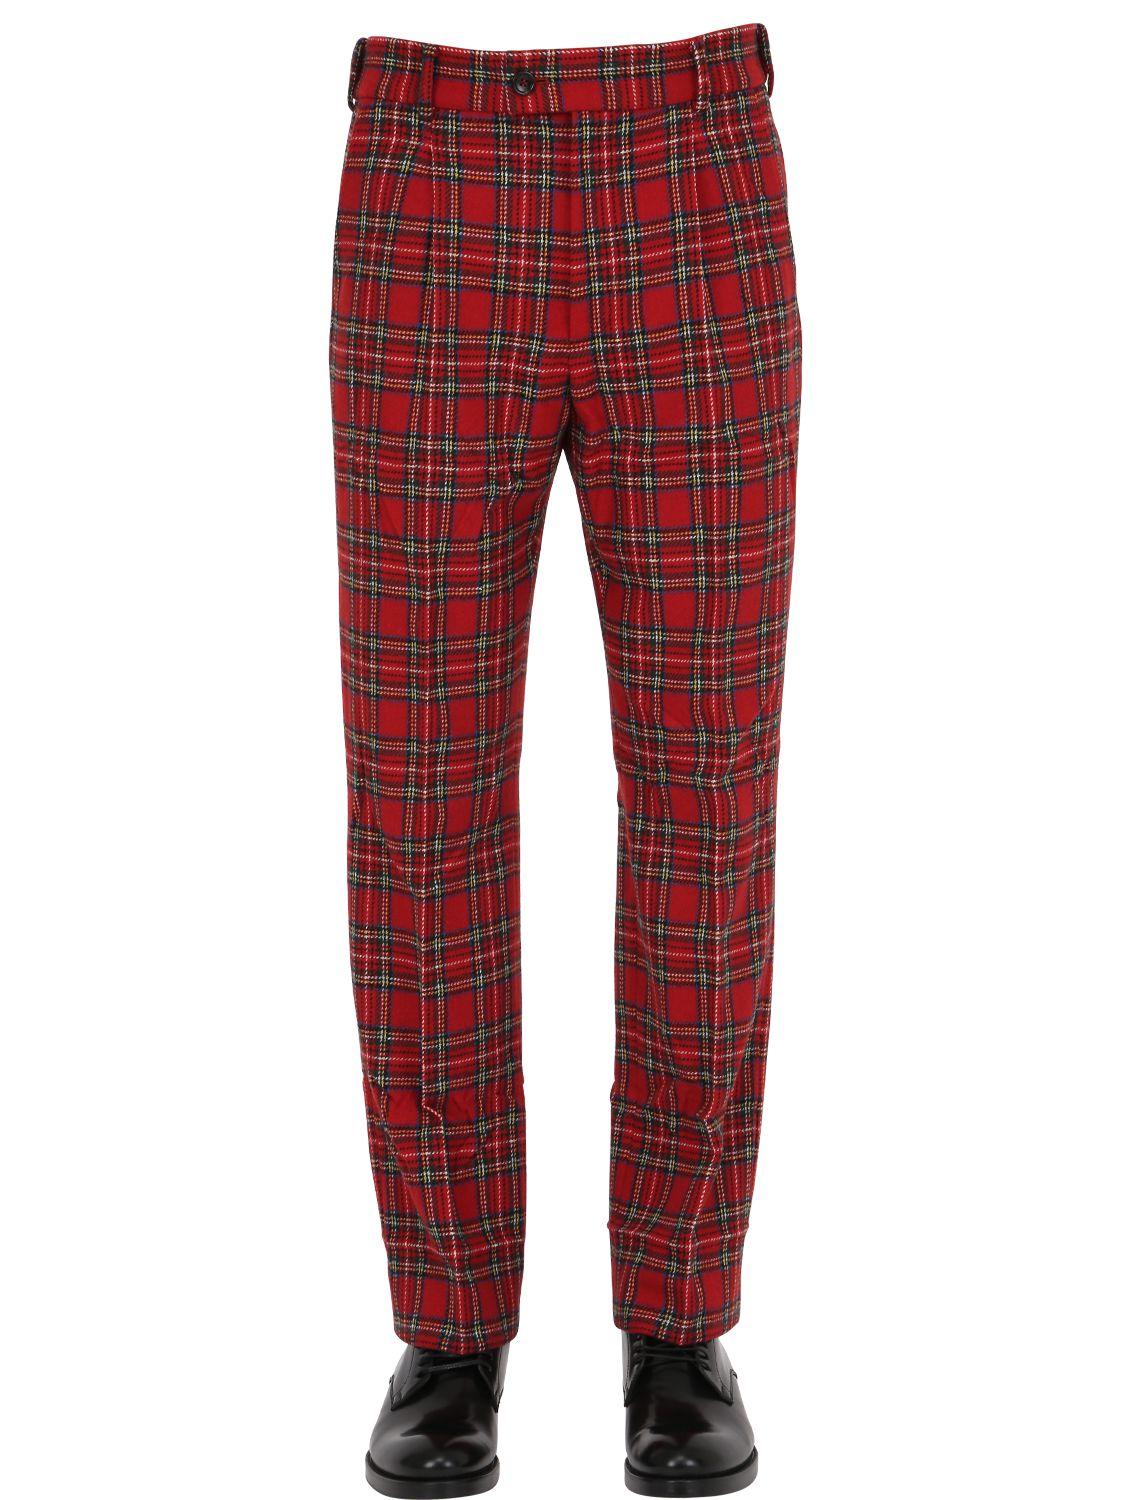 Gucci 22.5cm Plaid Wool Blend Pajama Pants for Men - Lyst